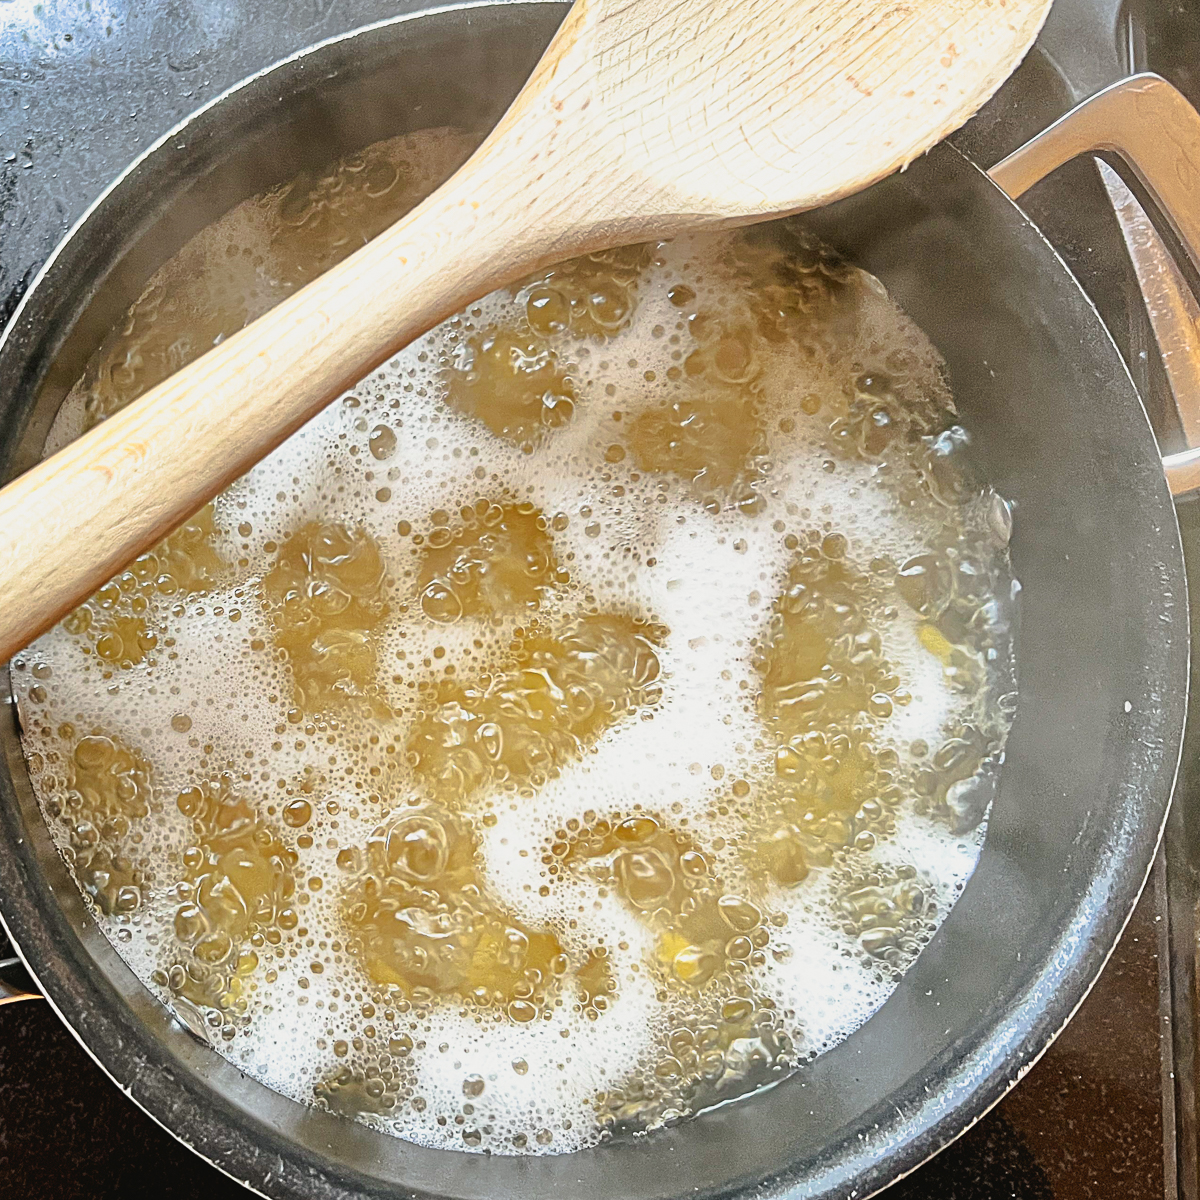 Cracker Barrel Macaroni and Cheese Copycat Recipe: step 1 - boil the elbow macaroni until al dente